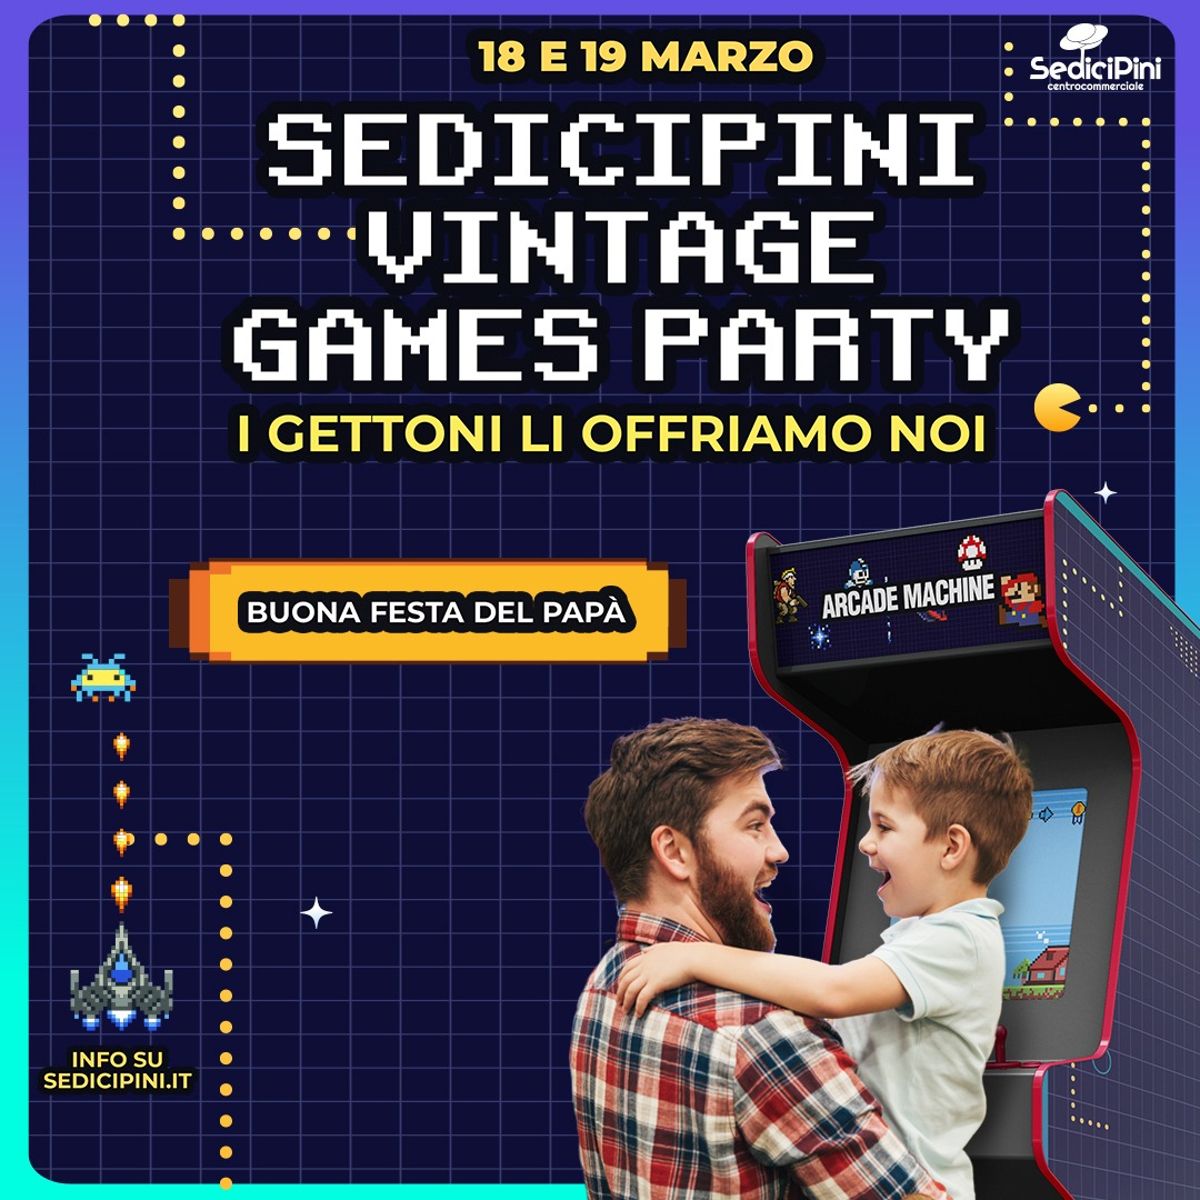 Il Sedici Pini Vintage Games Party a marzo 2023